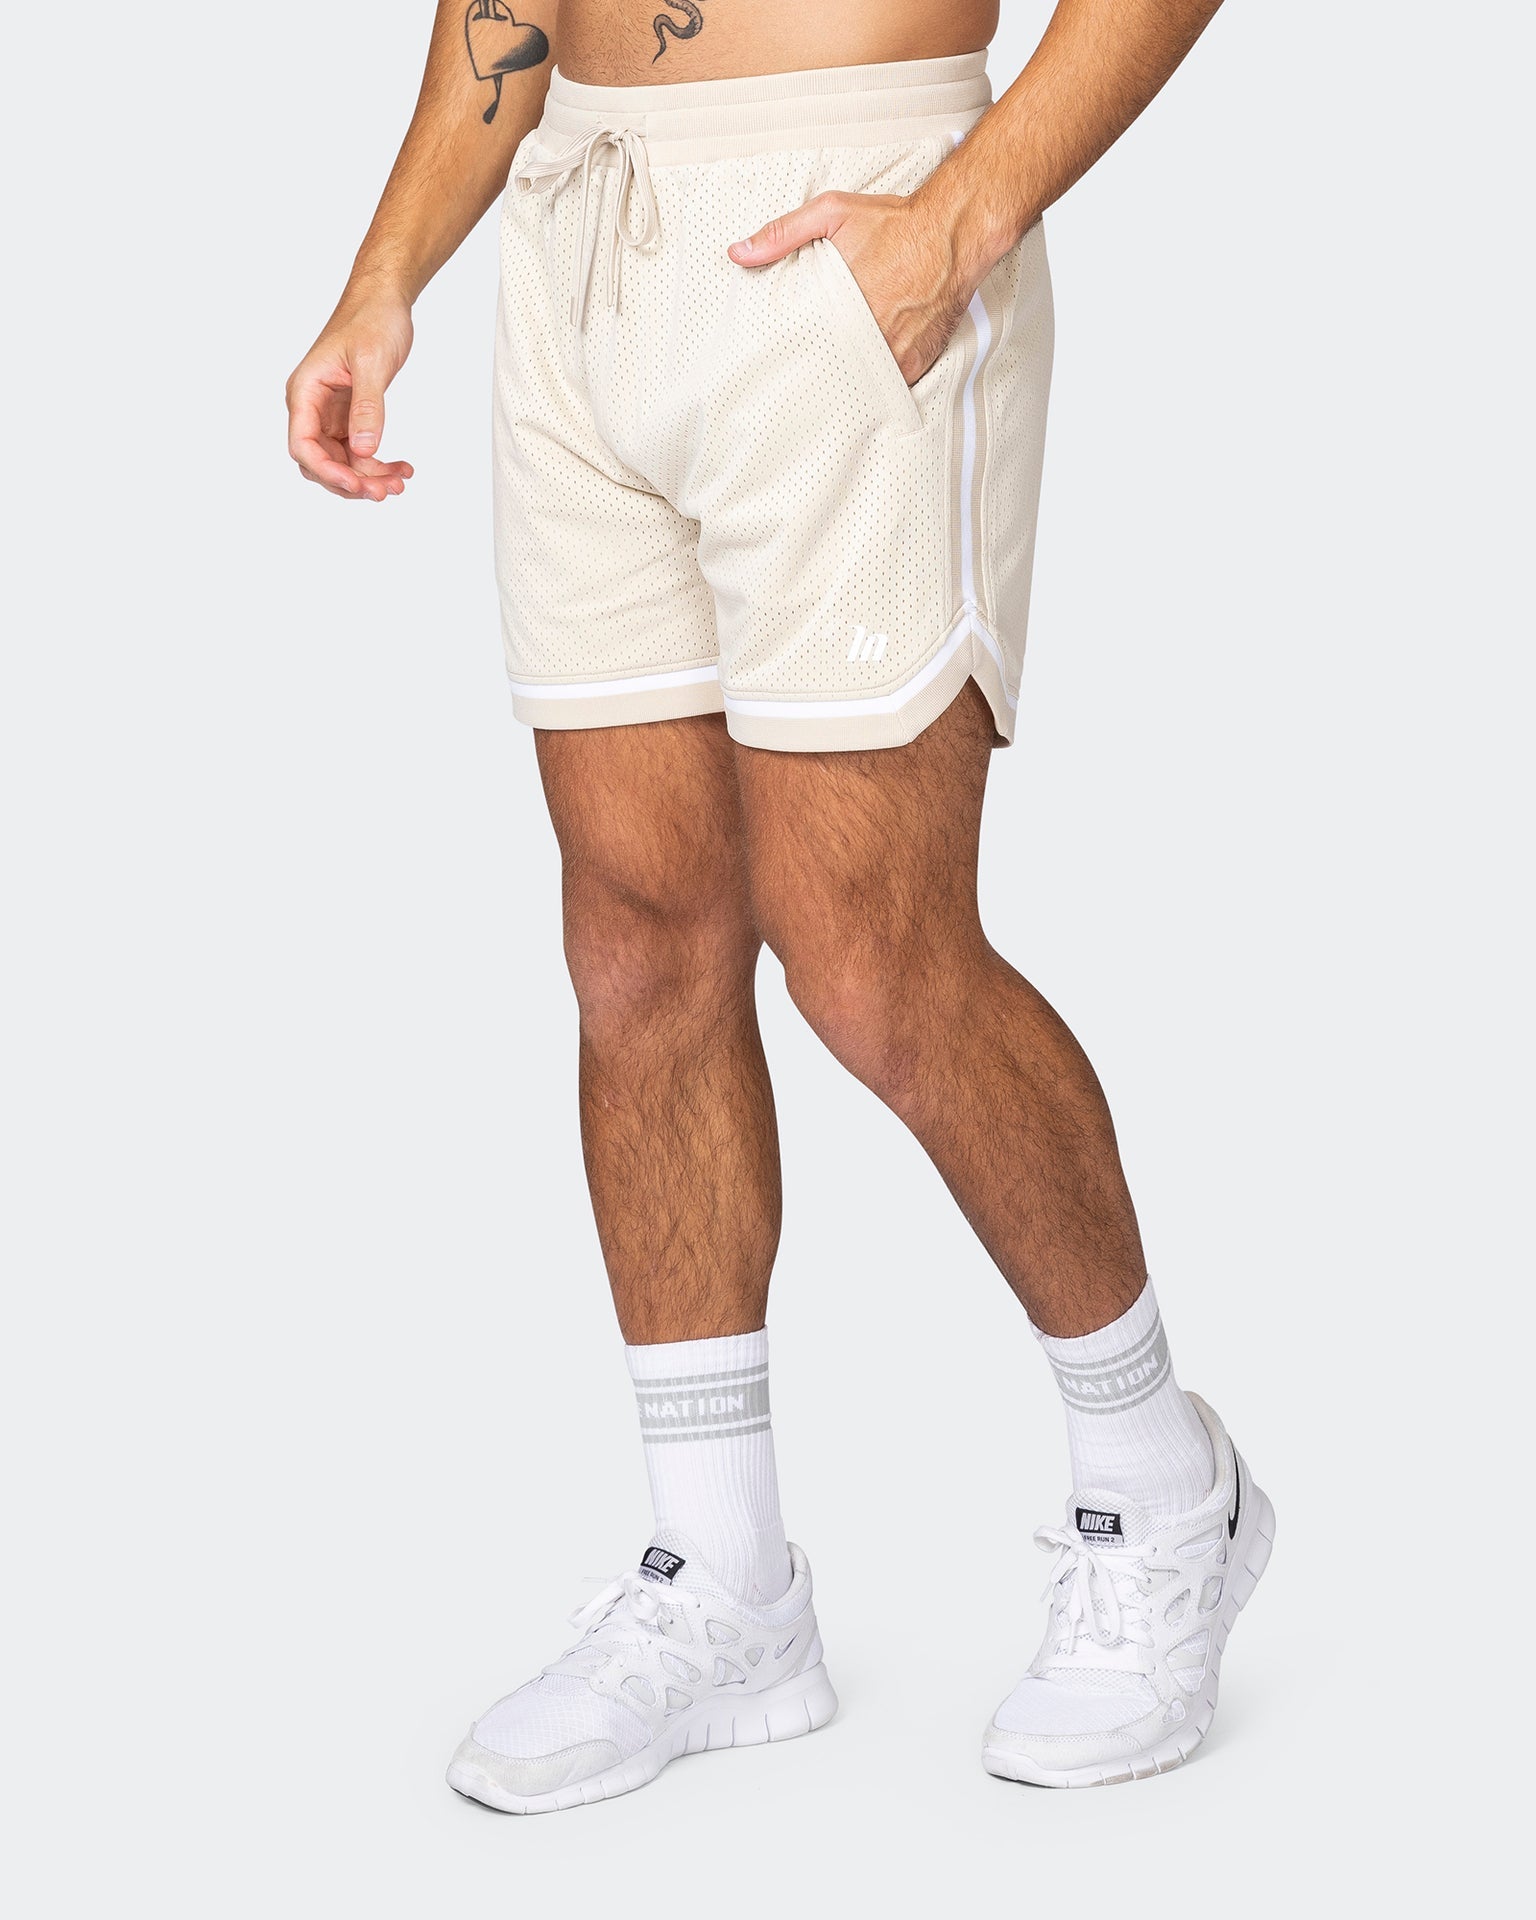 musclenation Gym Shorts Mens 5" Basketball Shorts - Cream